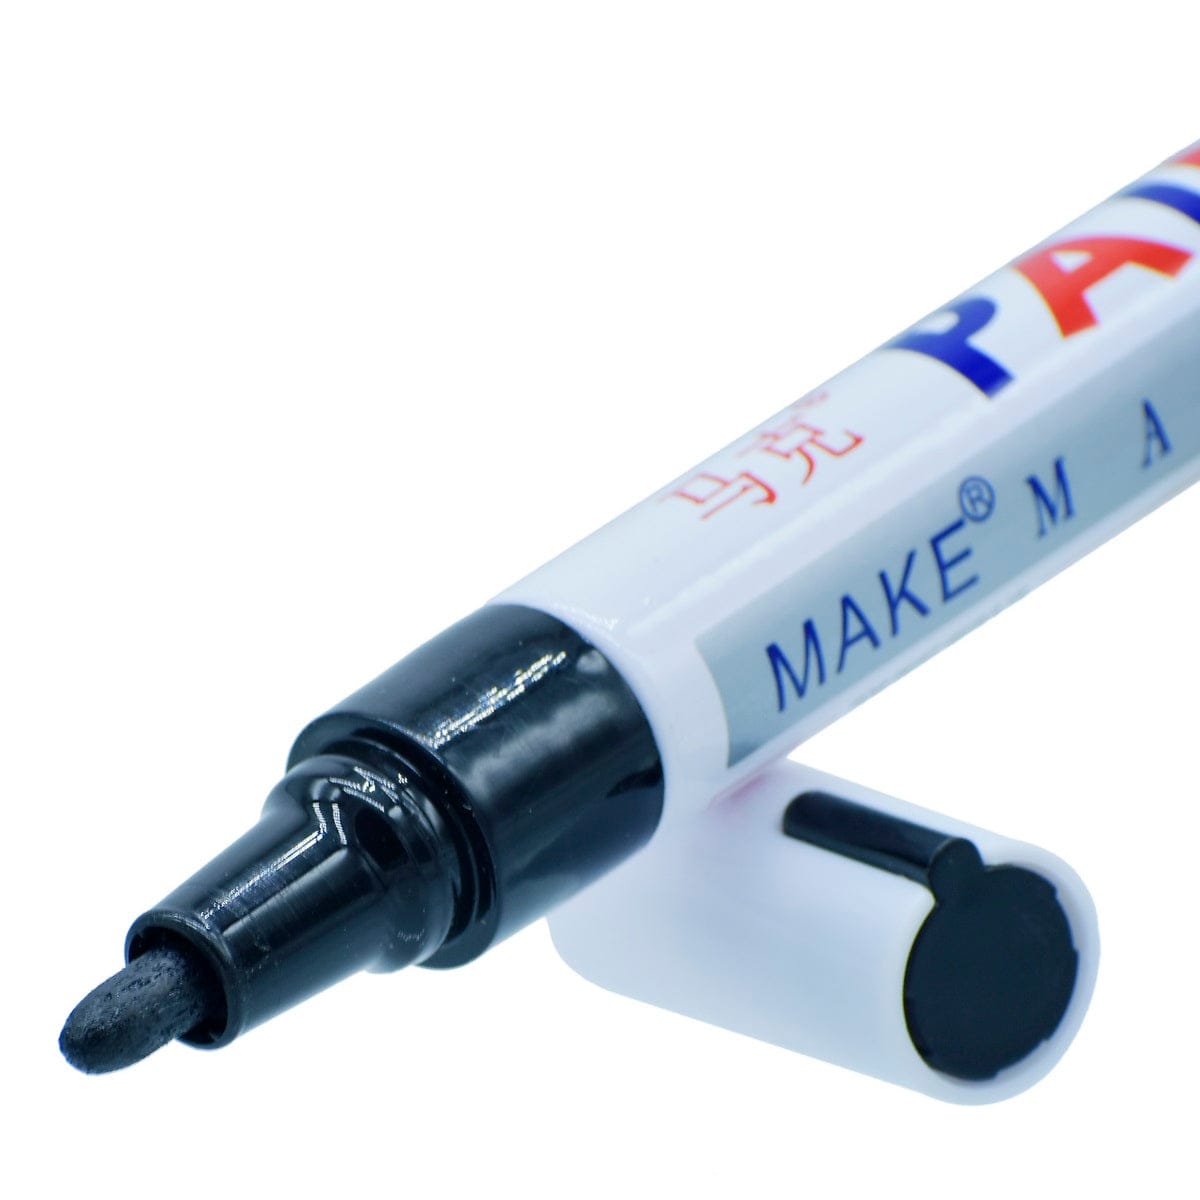 jags-mumbai Marker Pens And More Acrylic Painter Marker Black MK110BK